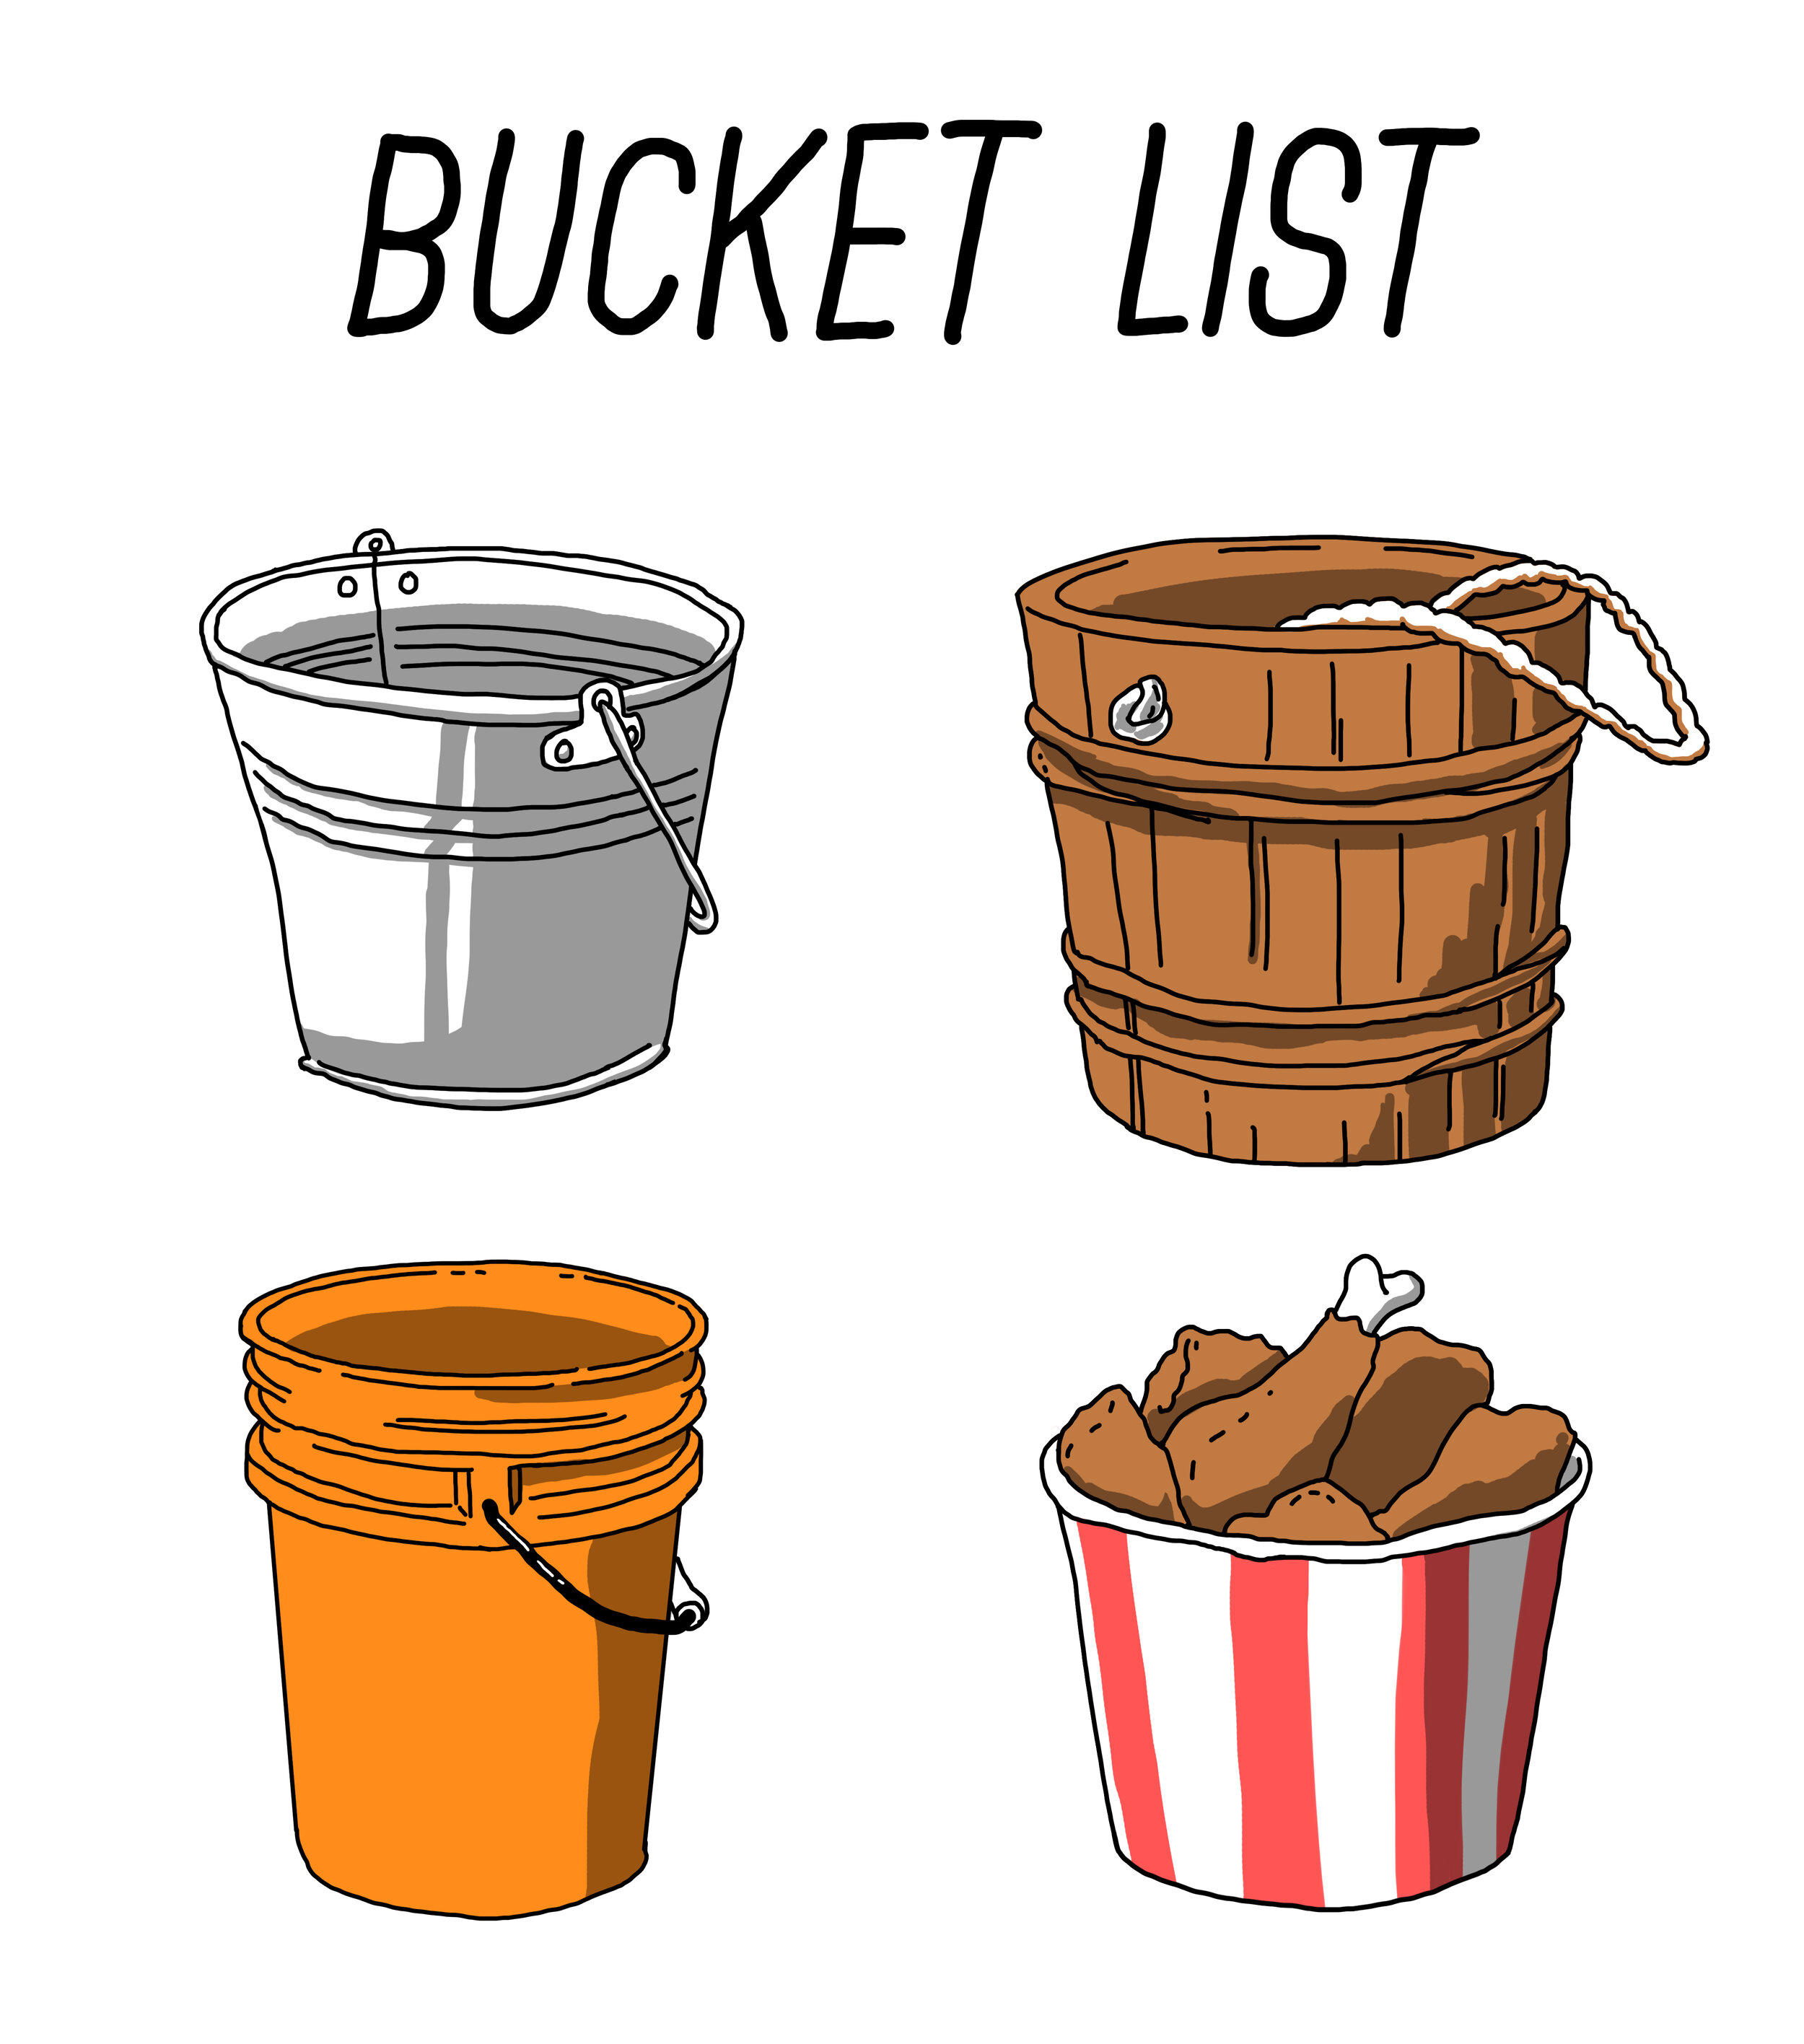 Bucket List.jpg